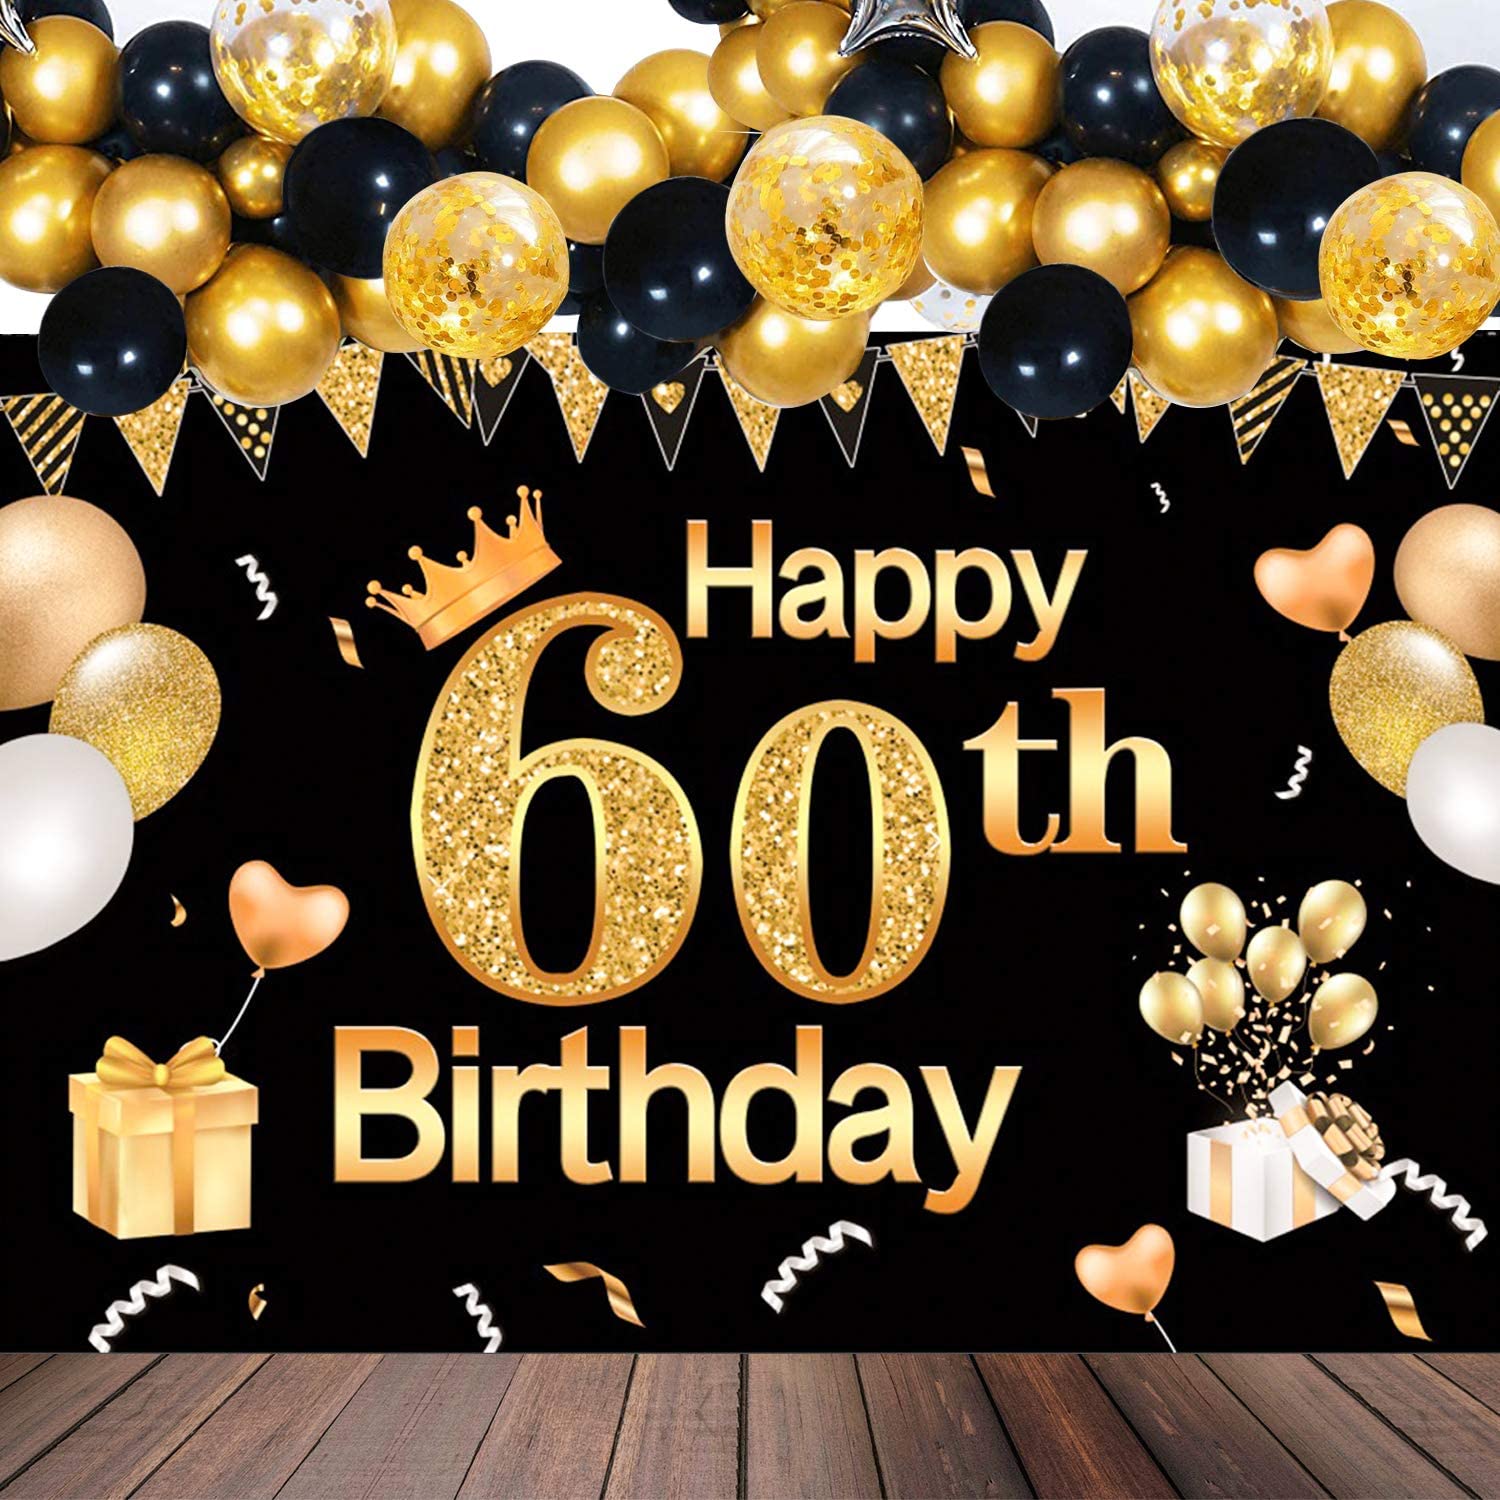 60th-birthday